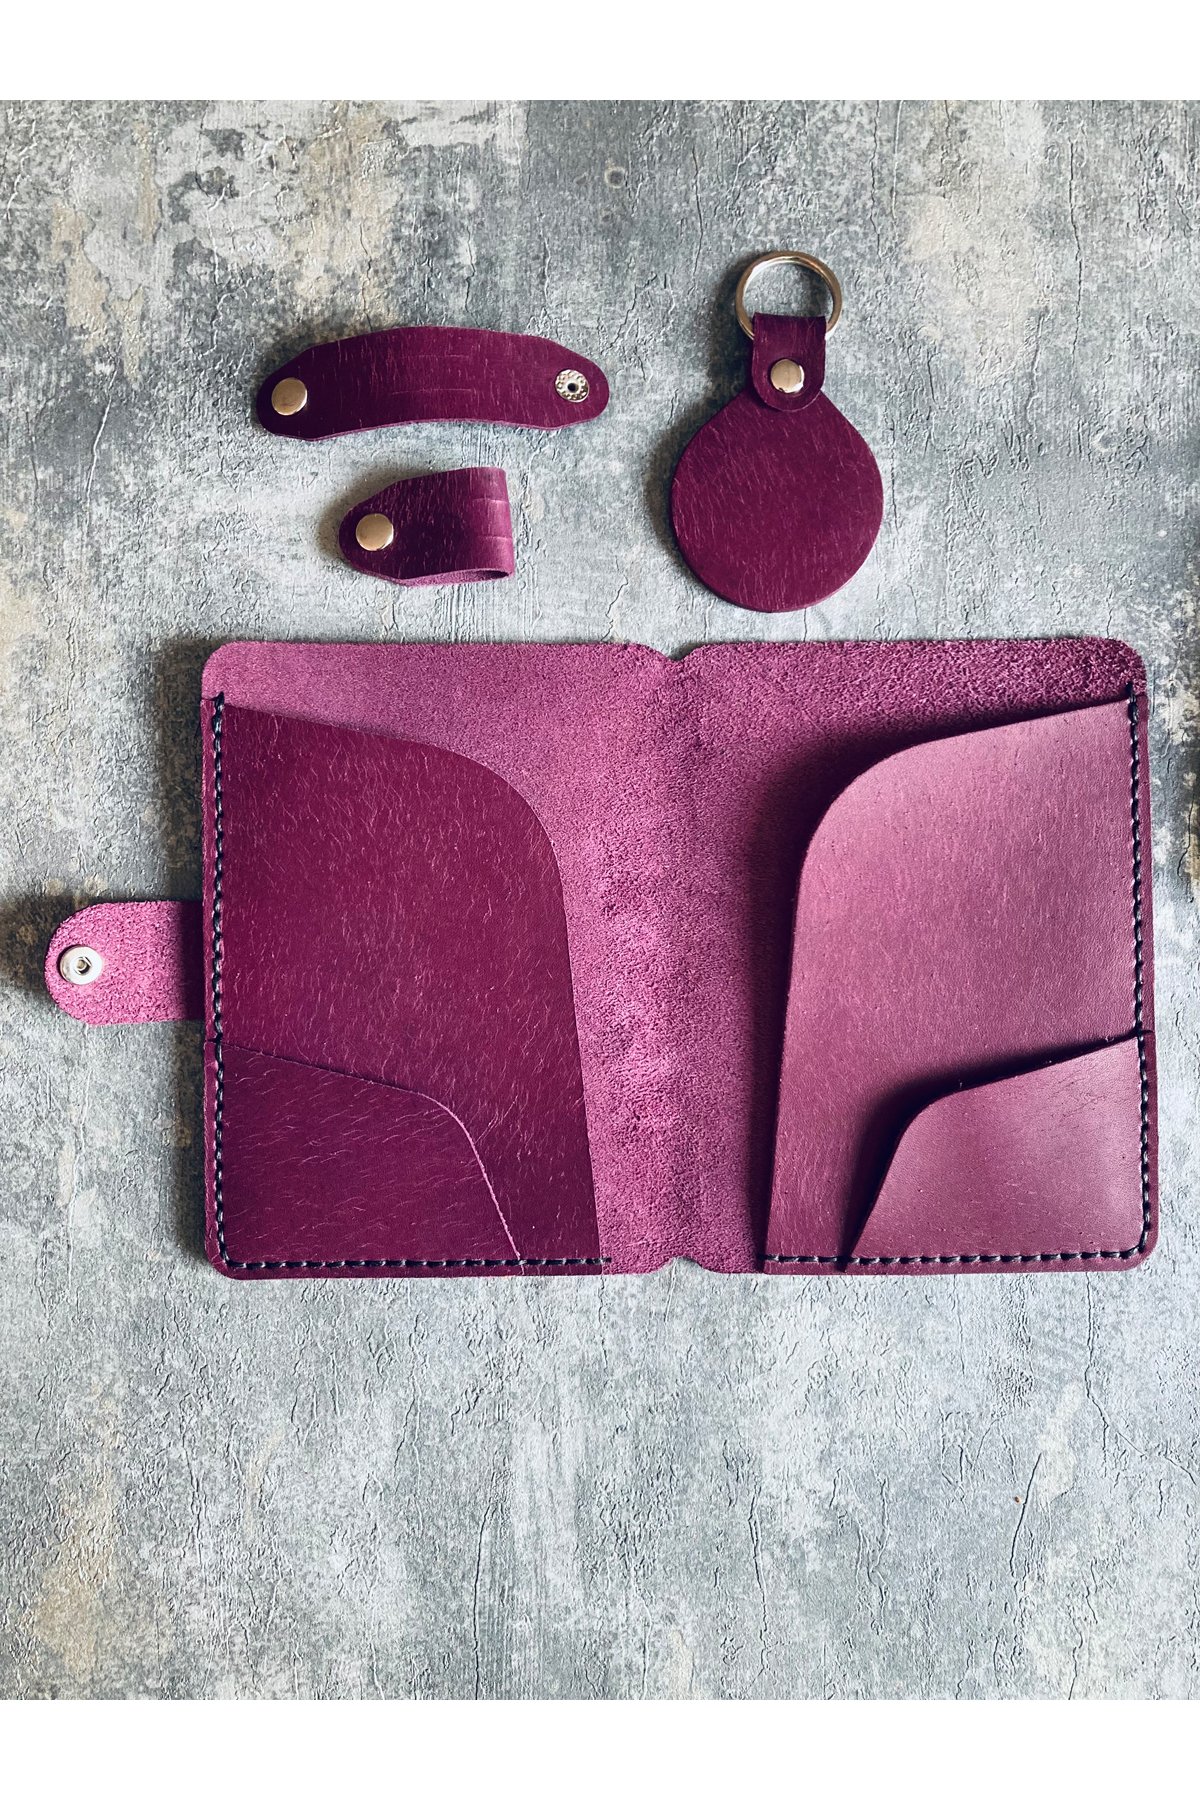 Set of 4 Passport Cover Set - Purple Leather | Bretya Leather